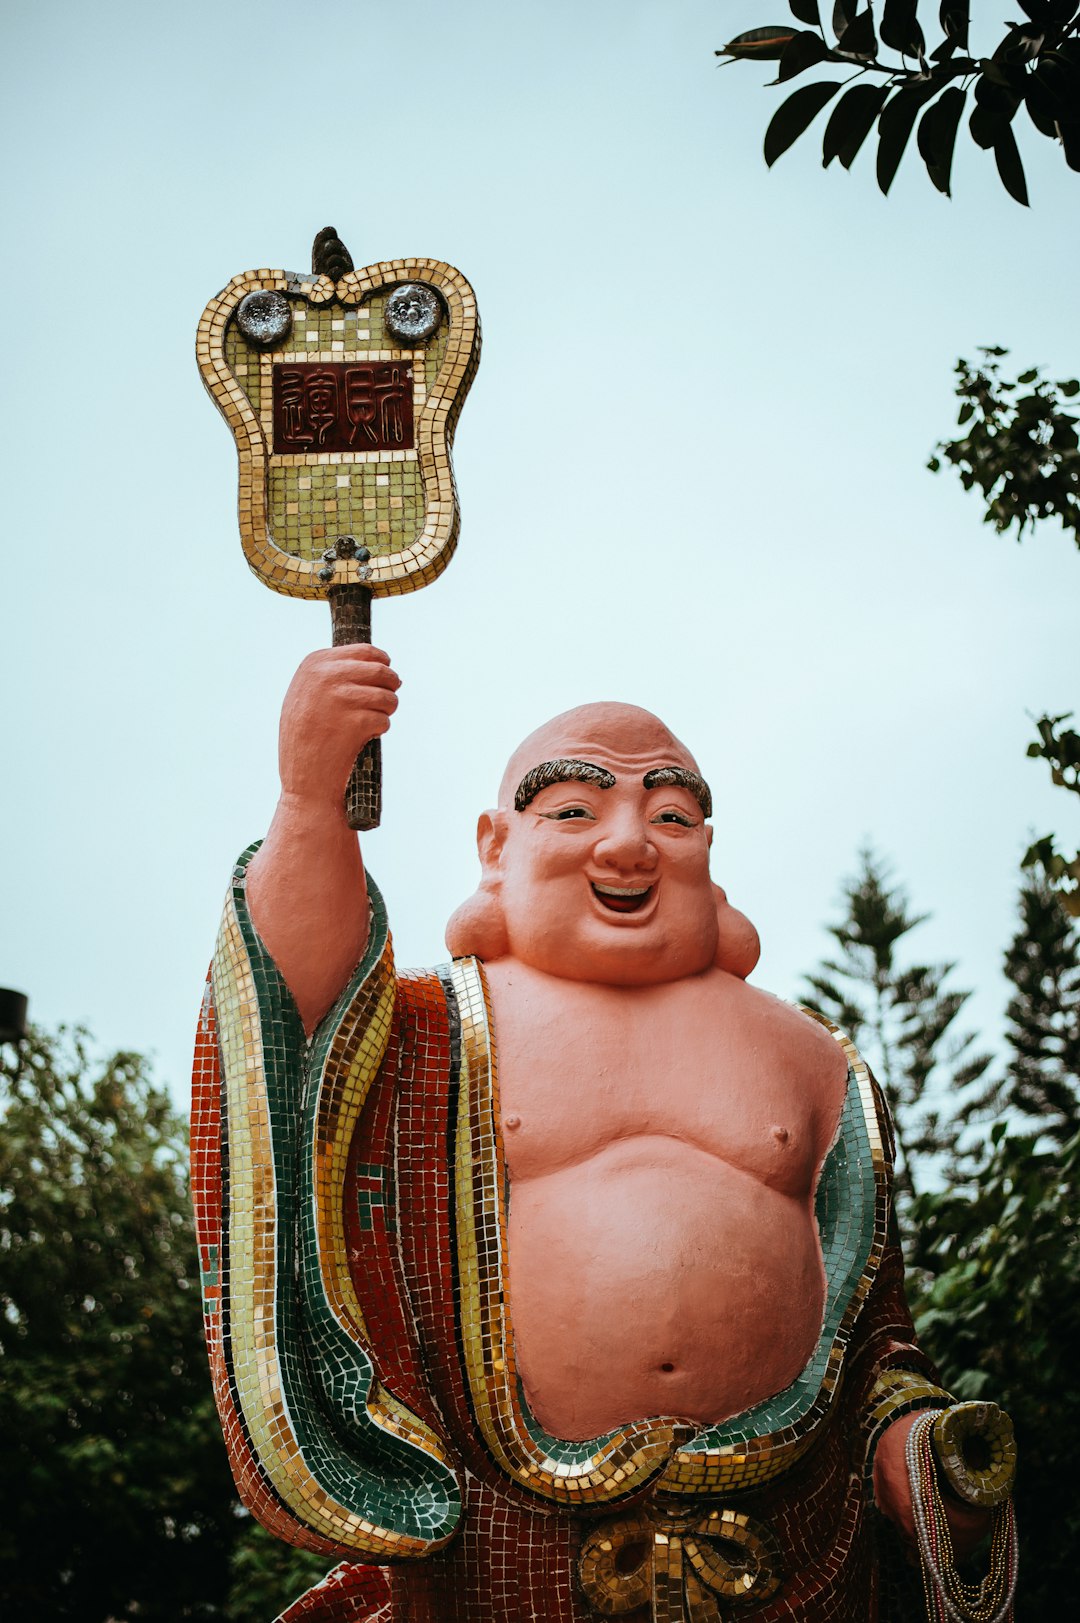 Budai statue surround green tress